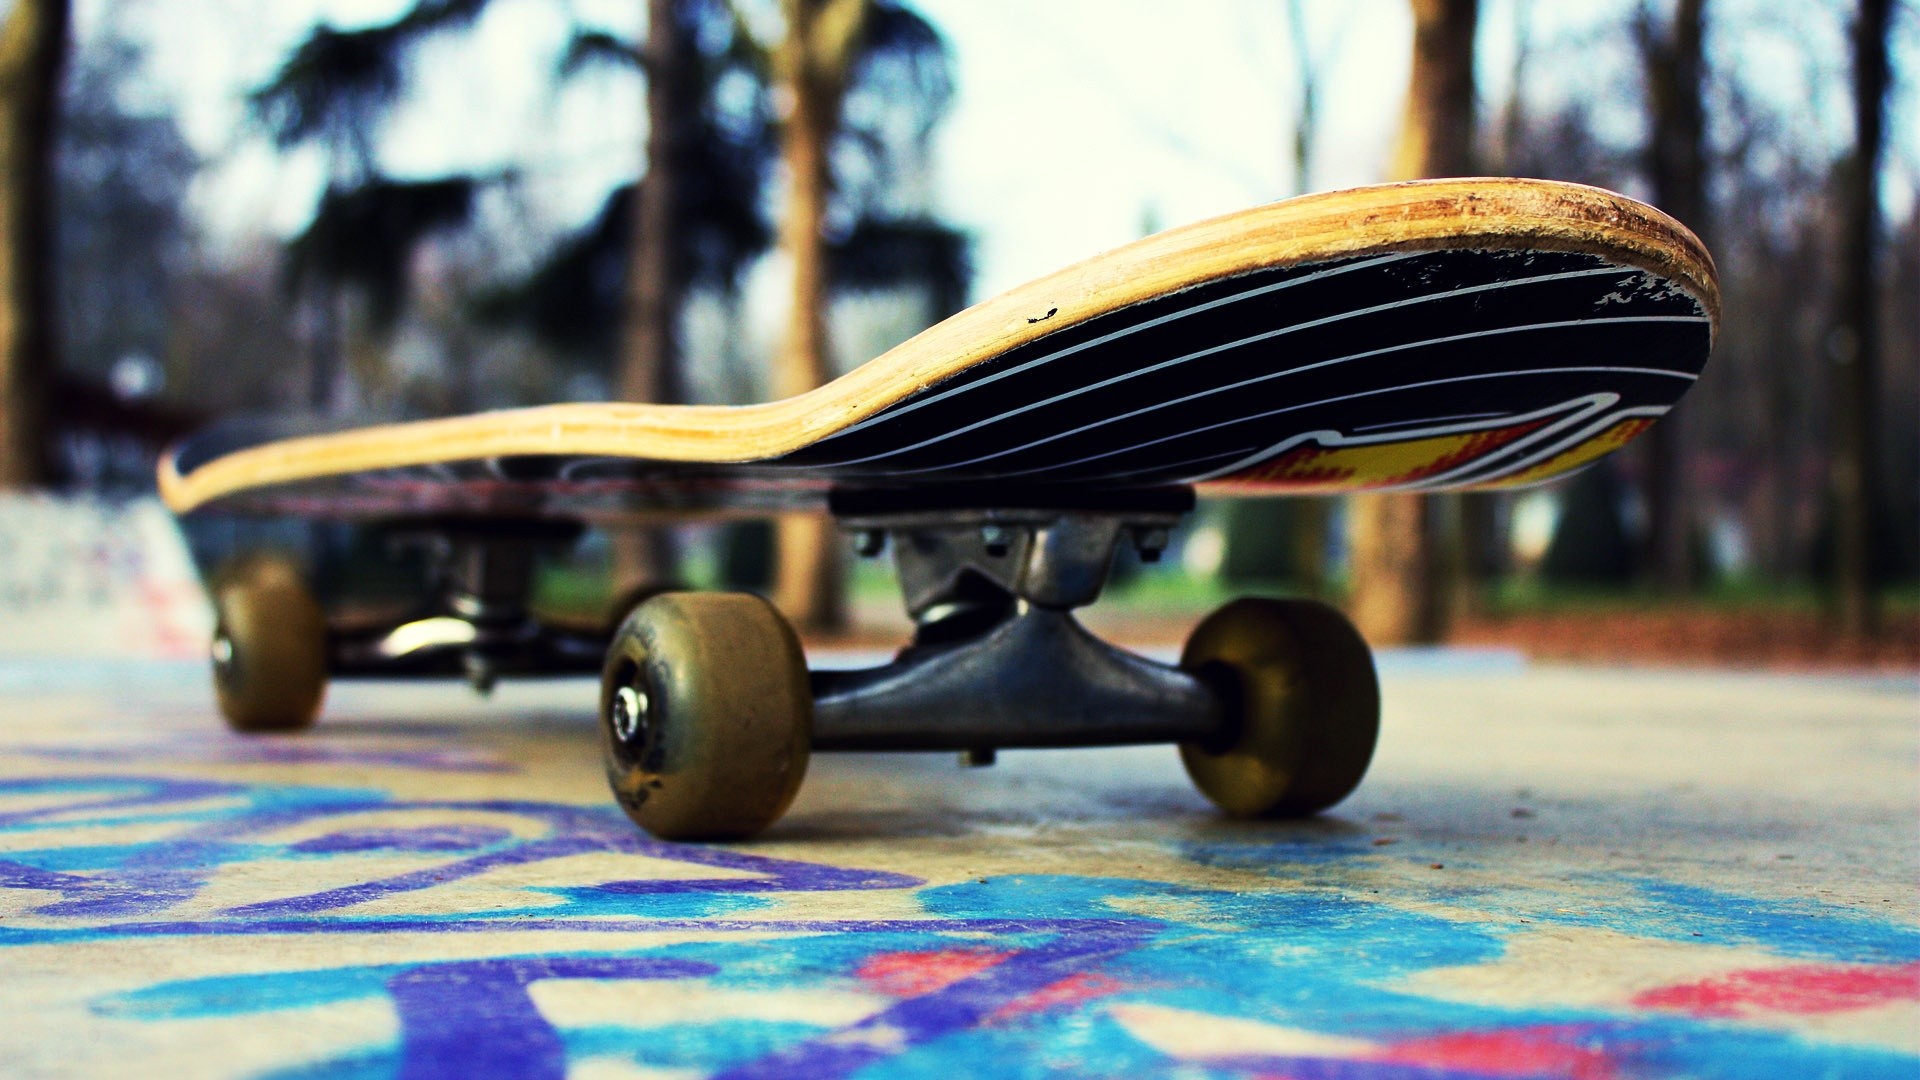 aweome skateboard photo